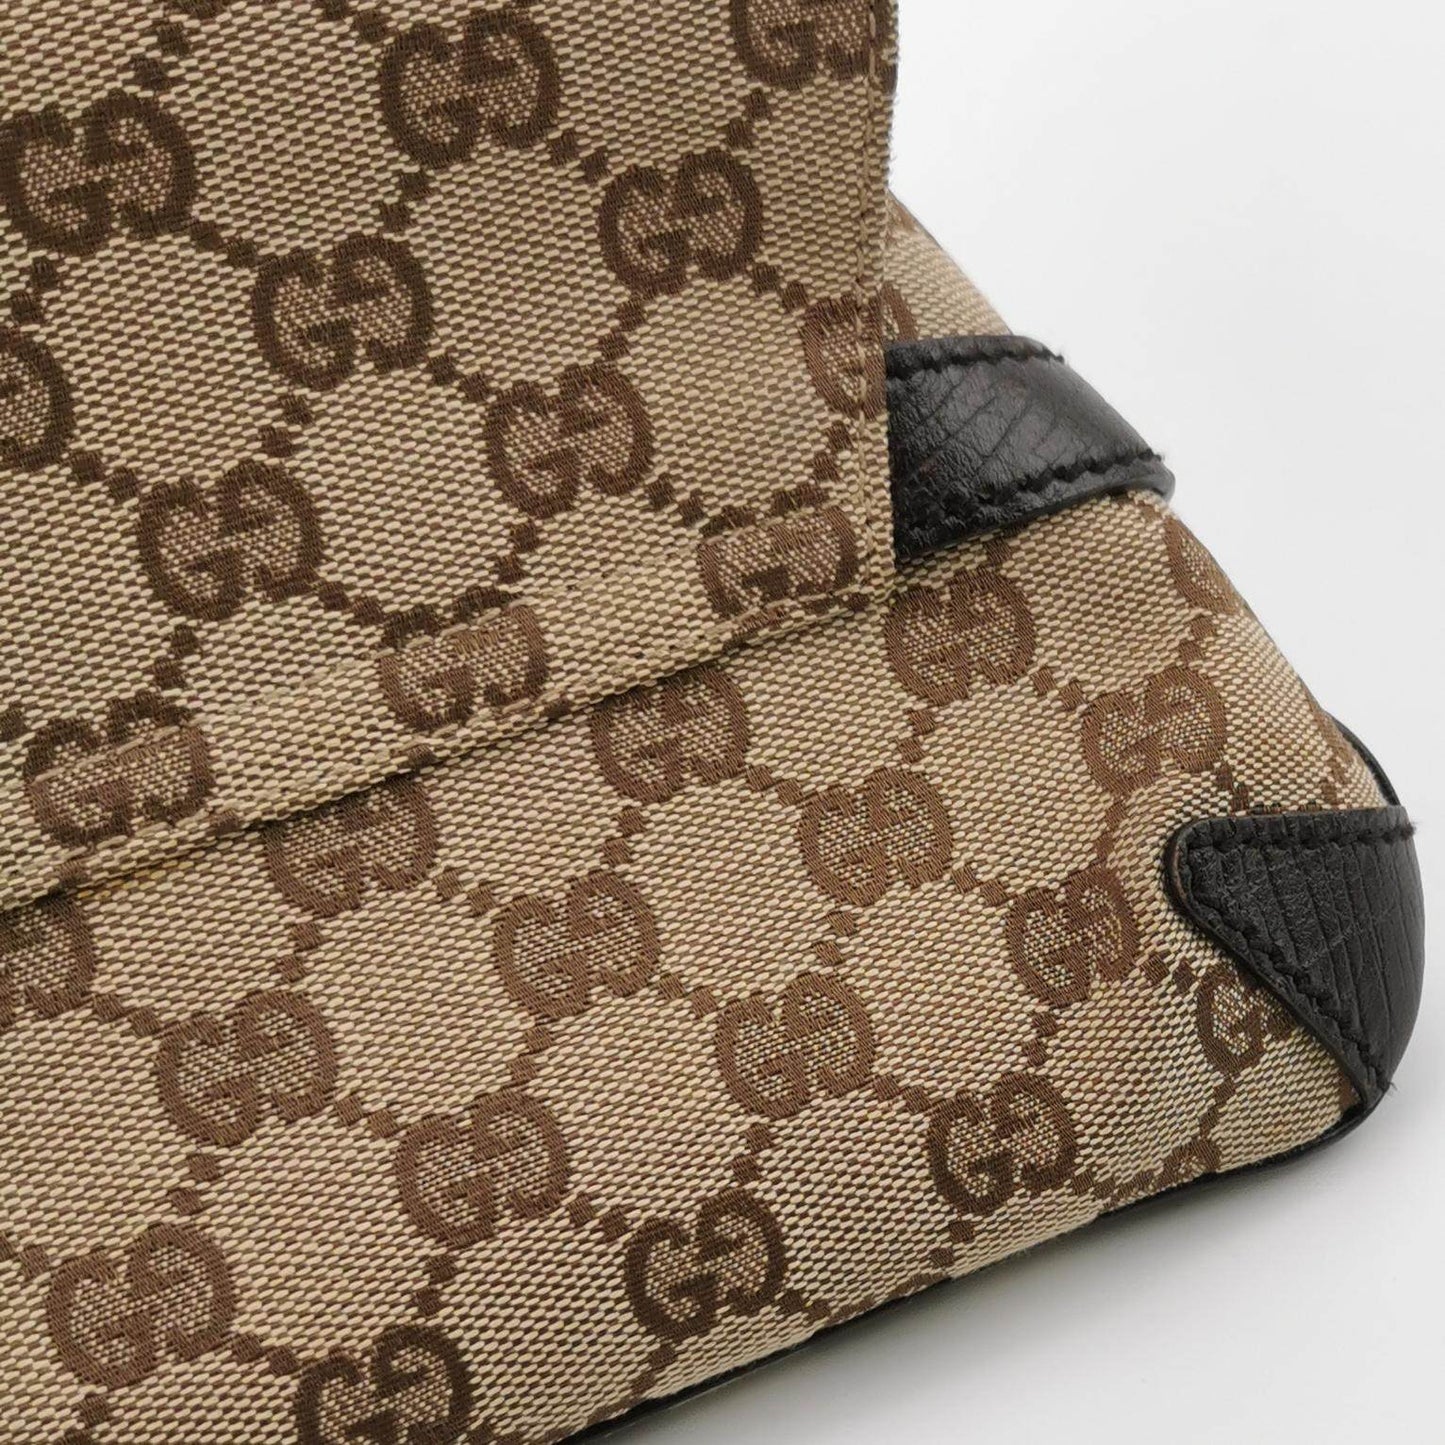 Gucci Horsebit 1955 Chain Clutch Small Cloth Beige Monogram Brown Leather Shoulder bag